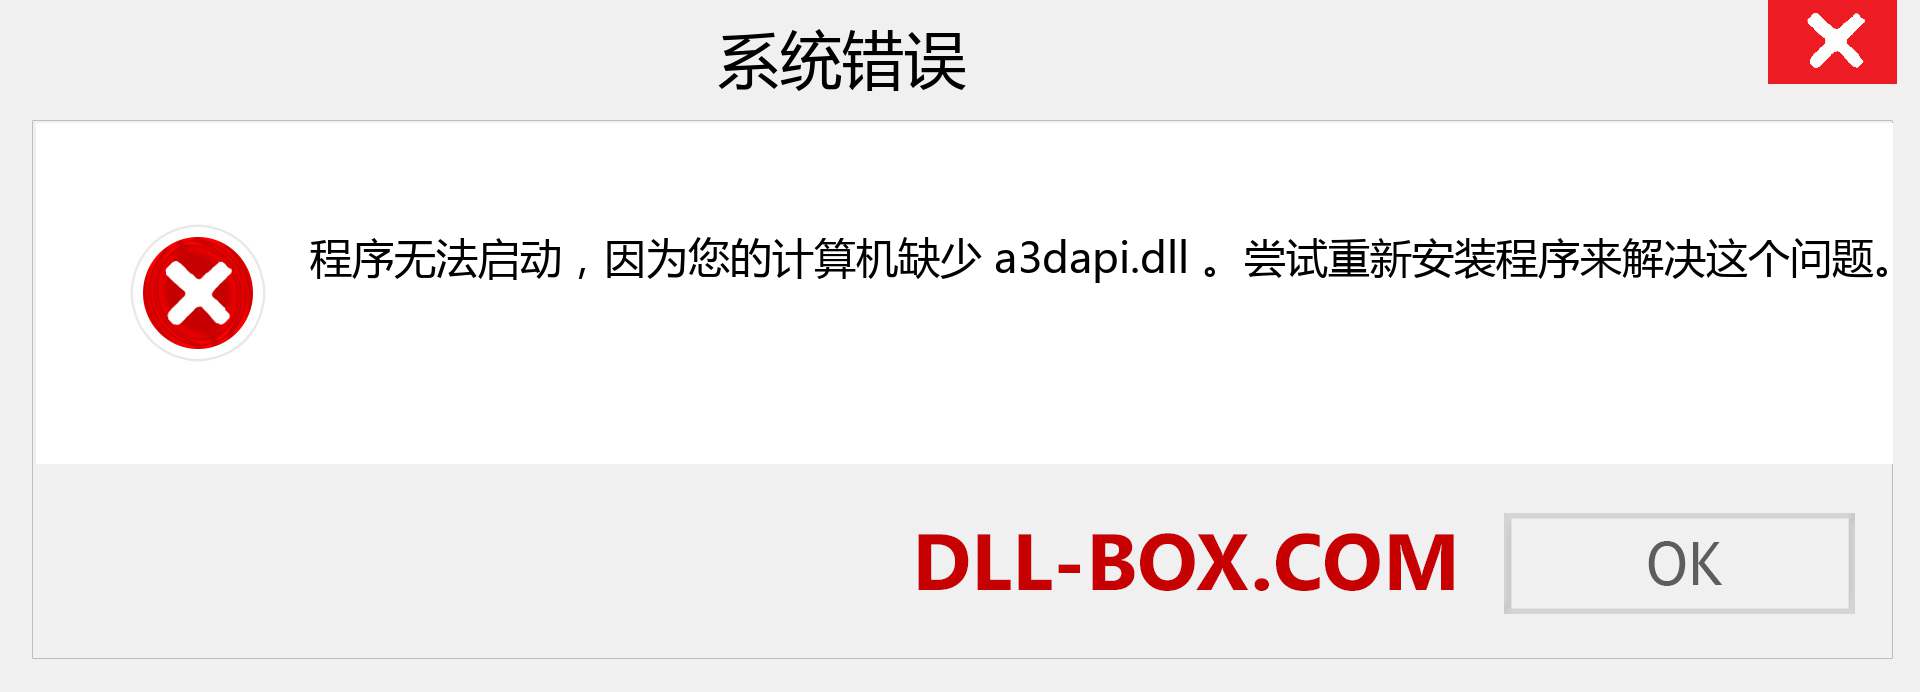 a3dapi.dll 文件丢失？。 适用于 Windows 7、8、10 的下载 - 修复 Windows、照片、图像上的 a3dapi dll 丢失错误